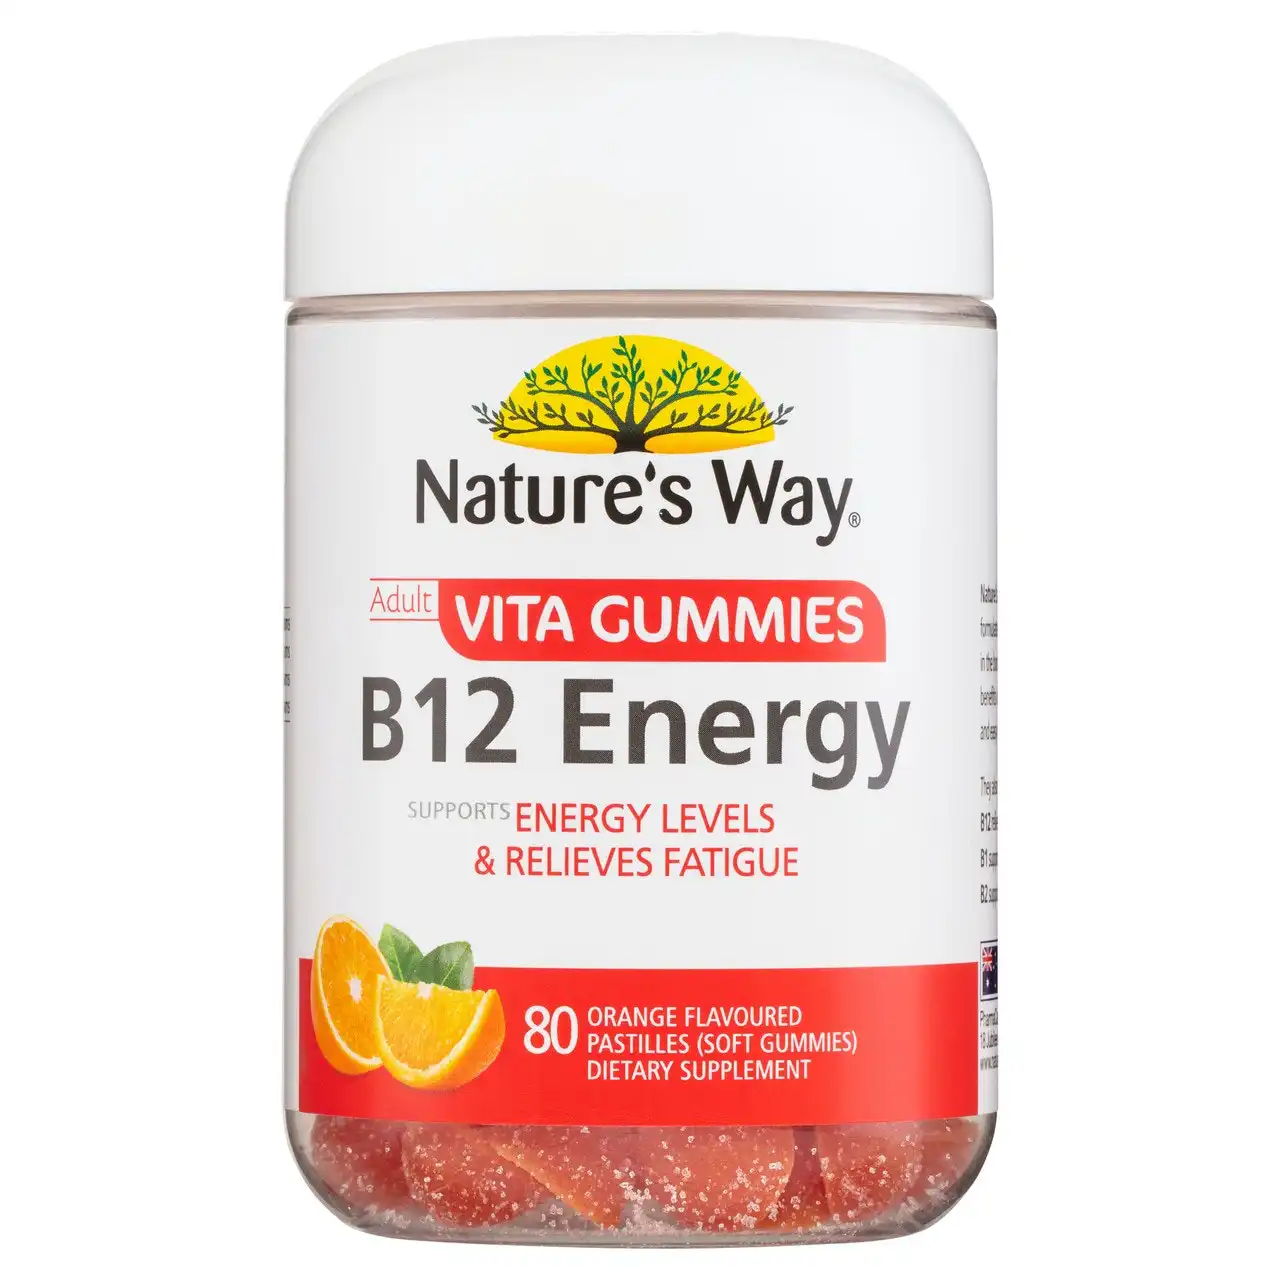 Nature's Way Adult Vita Gummies B12 Energy 80's